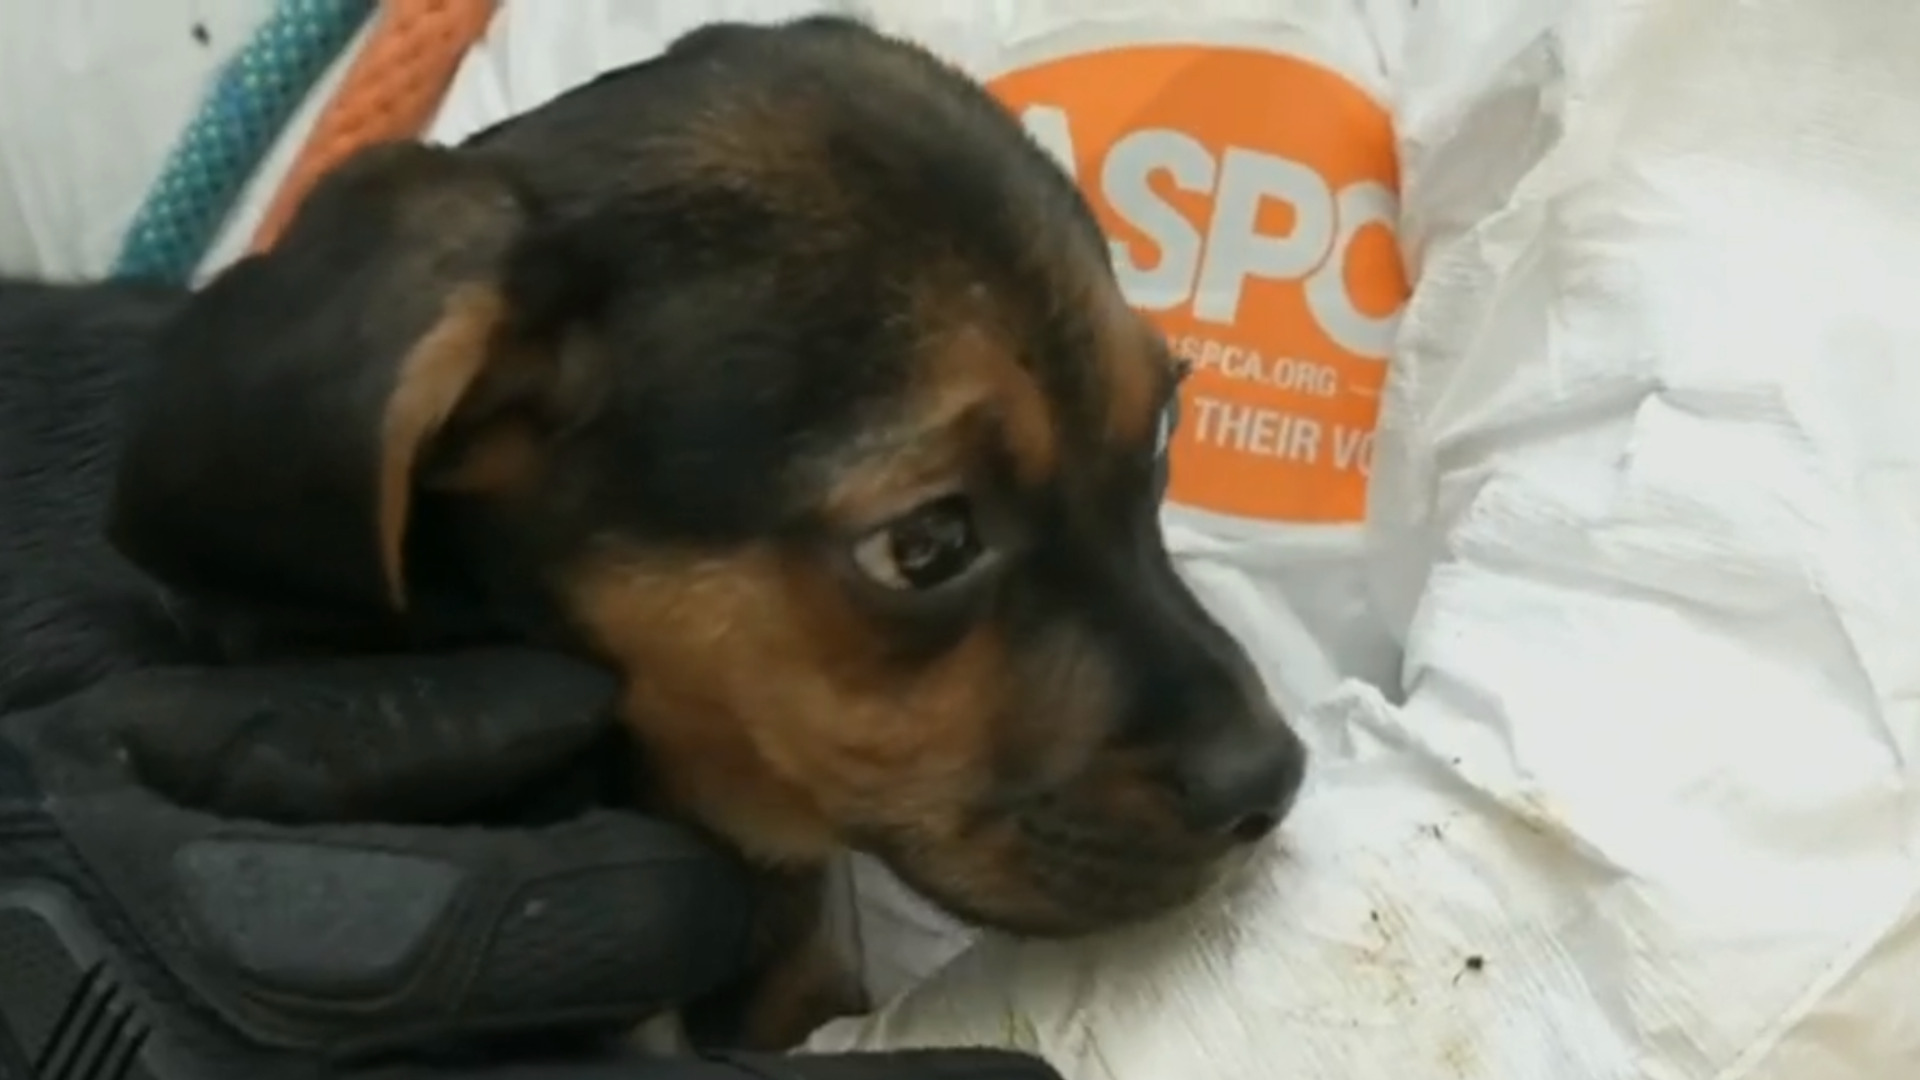 Watch CBS Evening News: ASPCA faces criticism from animal welfare groups -  Full show on CBS